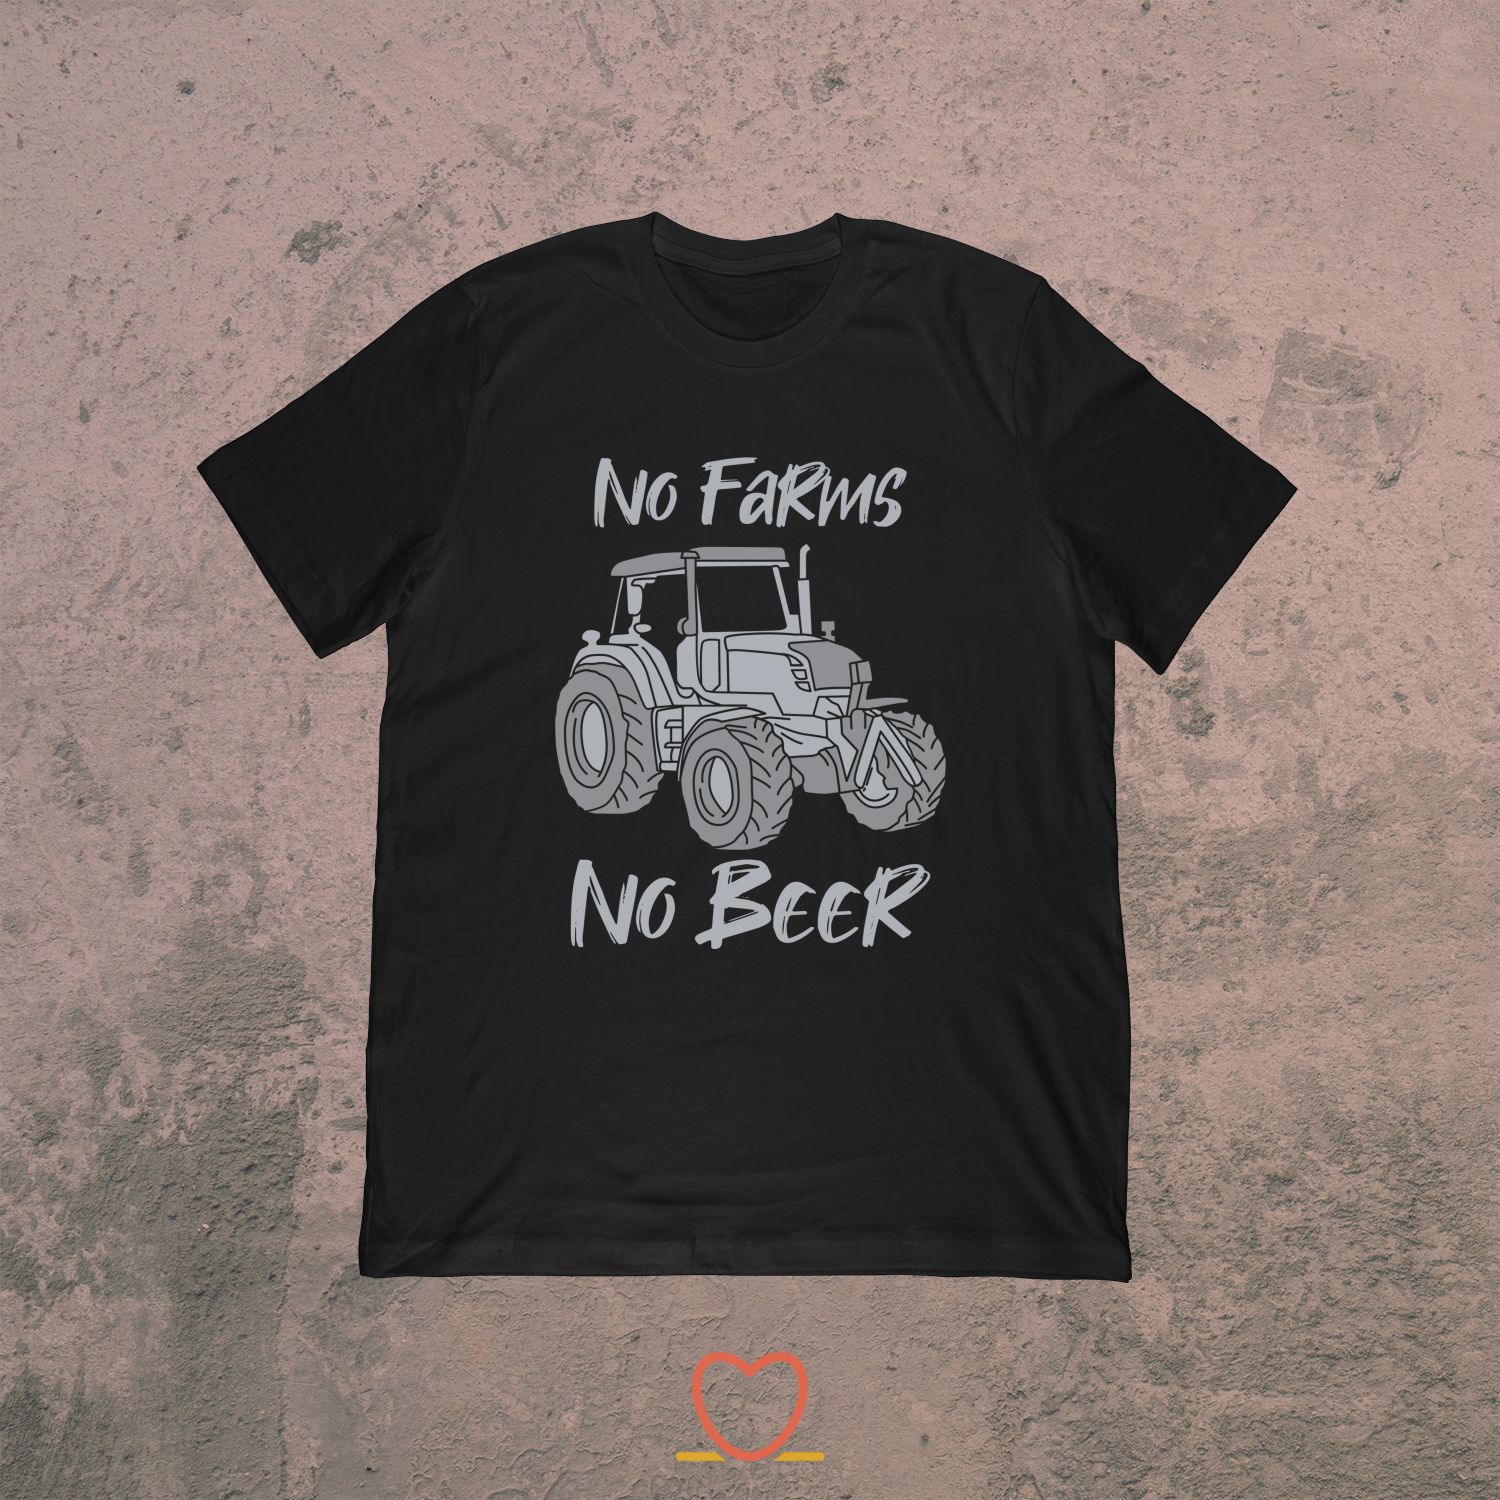 No Farms No Beer – Funny Farming And Beer Tee